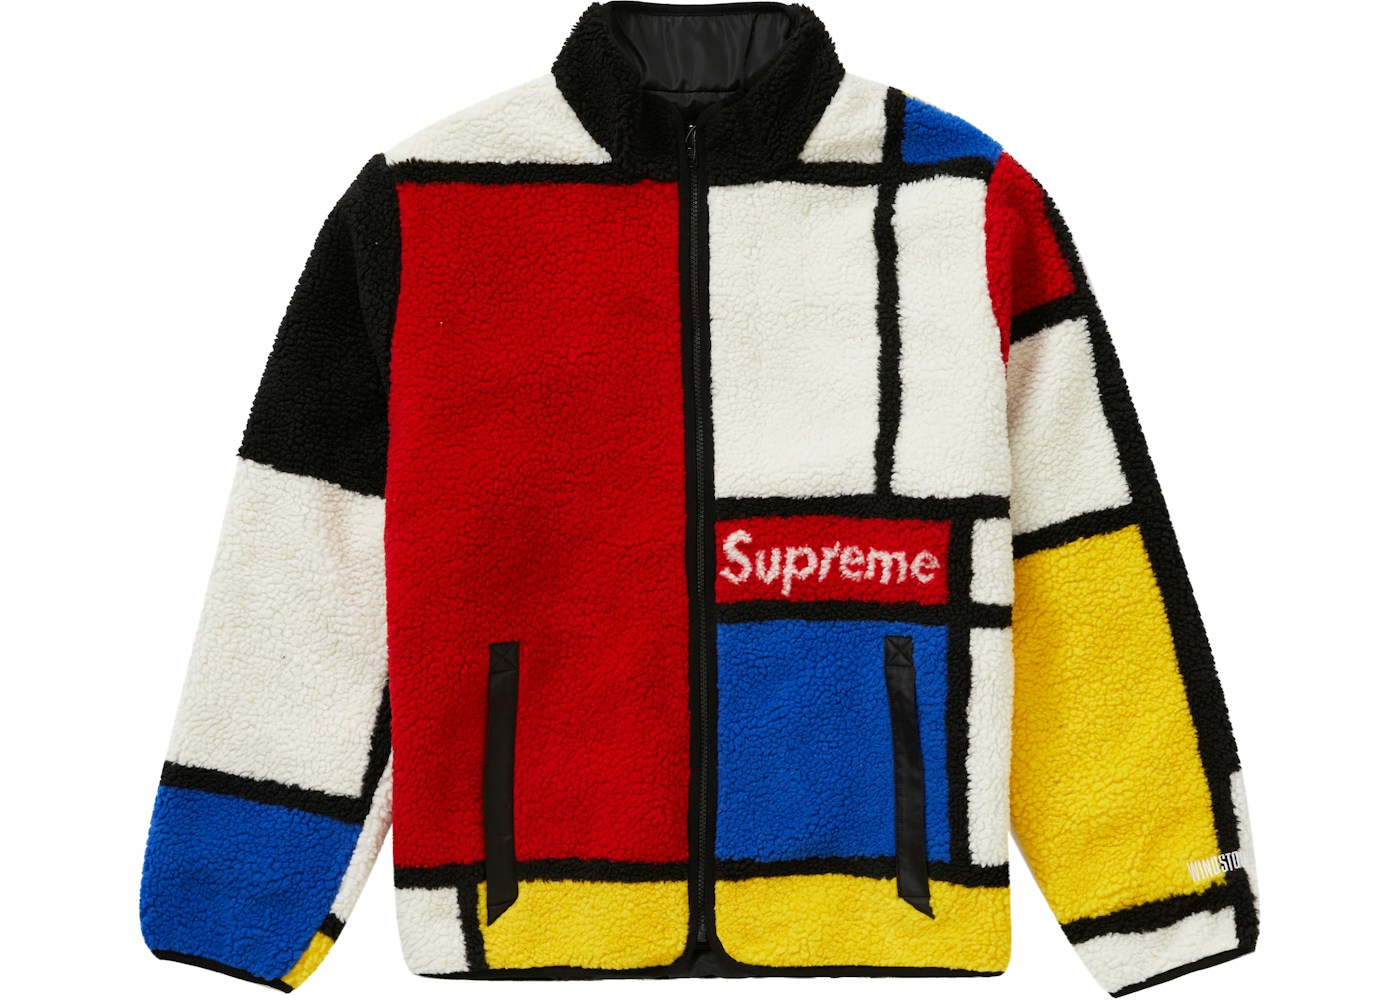 Supreme Reversible Colorblocked Fleece